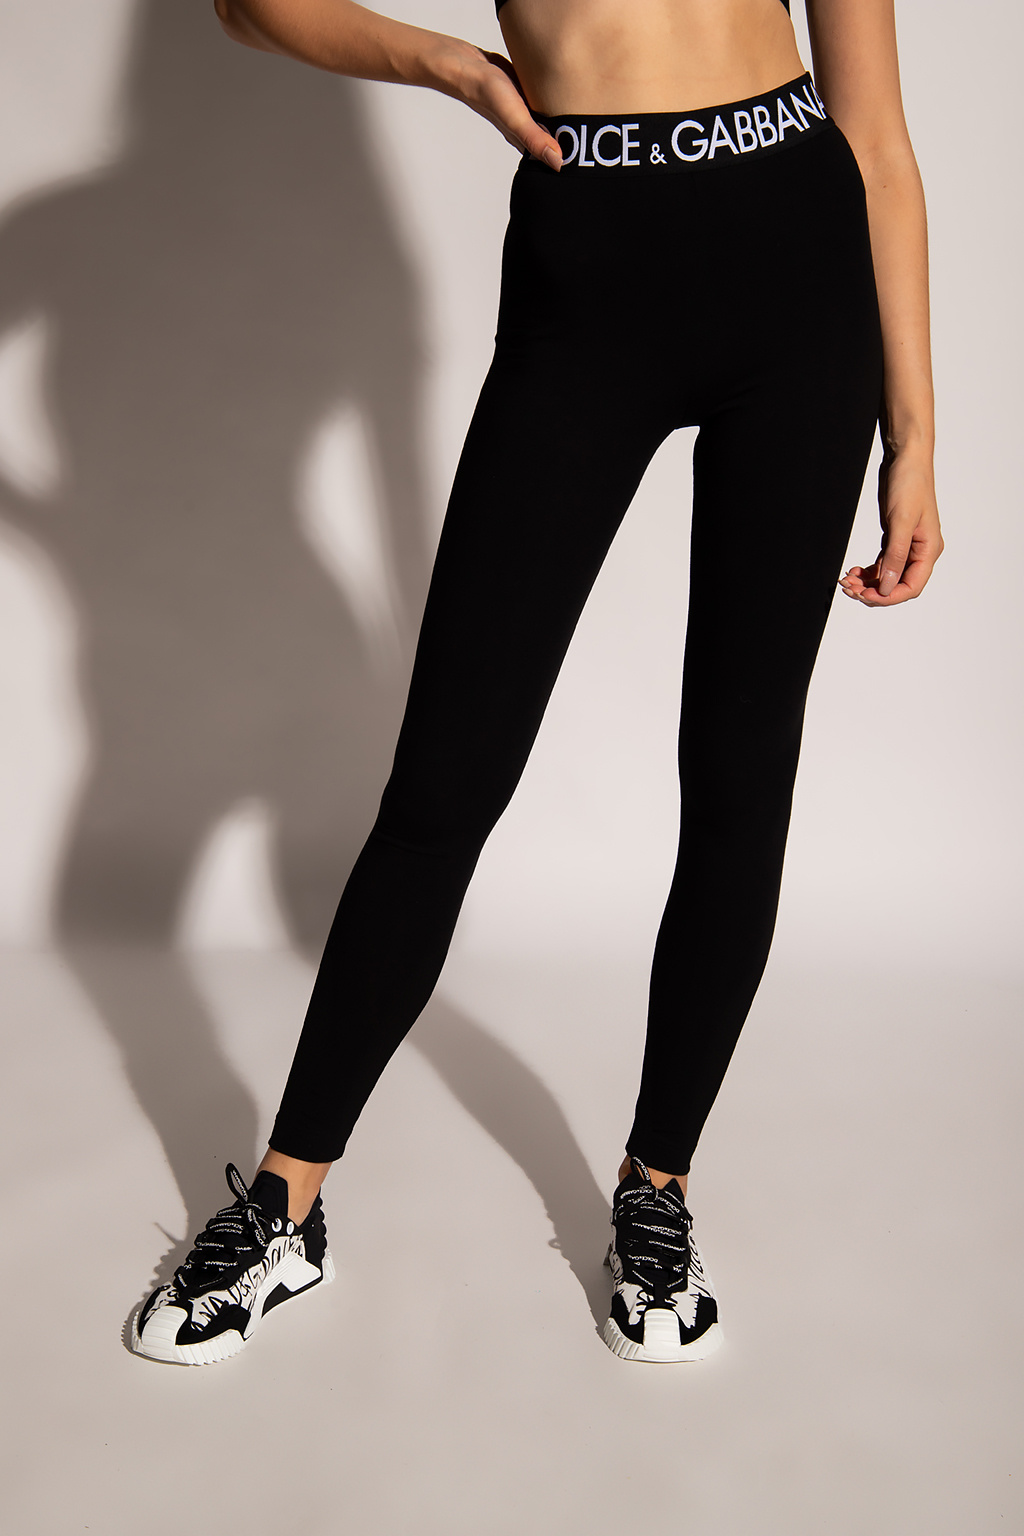 DOLCE & GABBANA PATTERNED SWEAT SHORTS - Black Leggings with logo